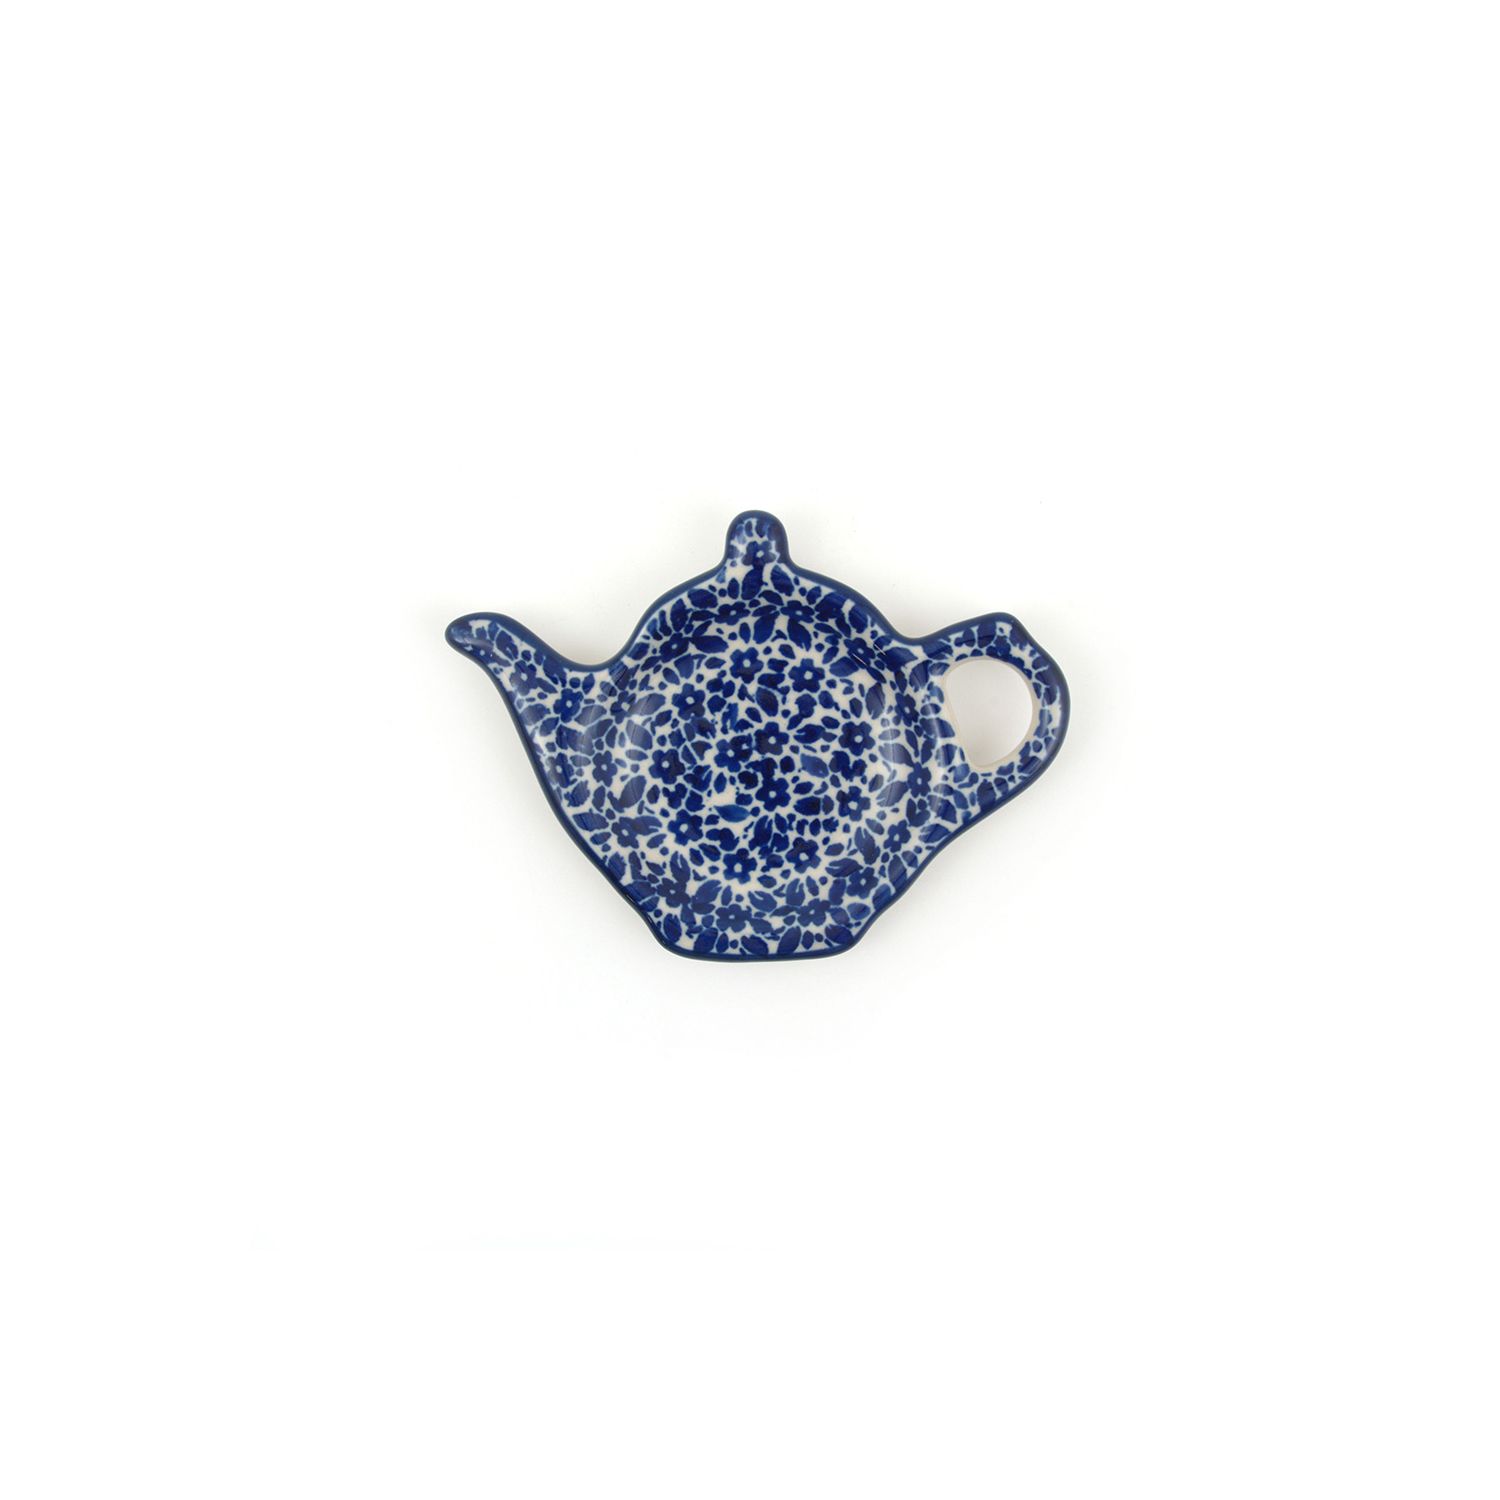 teabag-dish-indigo-bunzlau-castle-blue-white-teapot